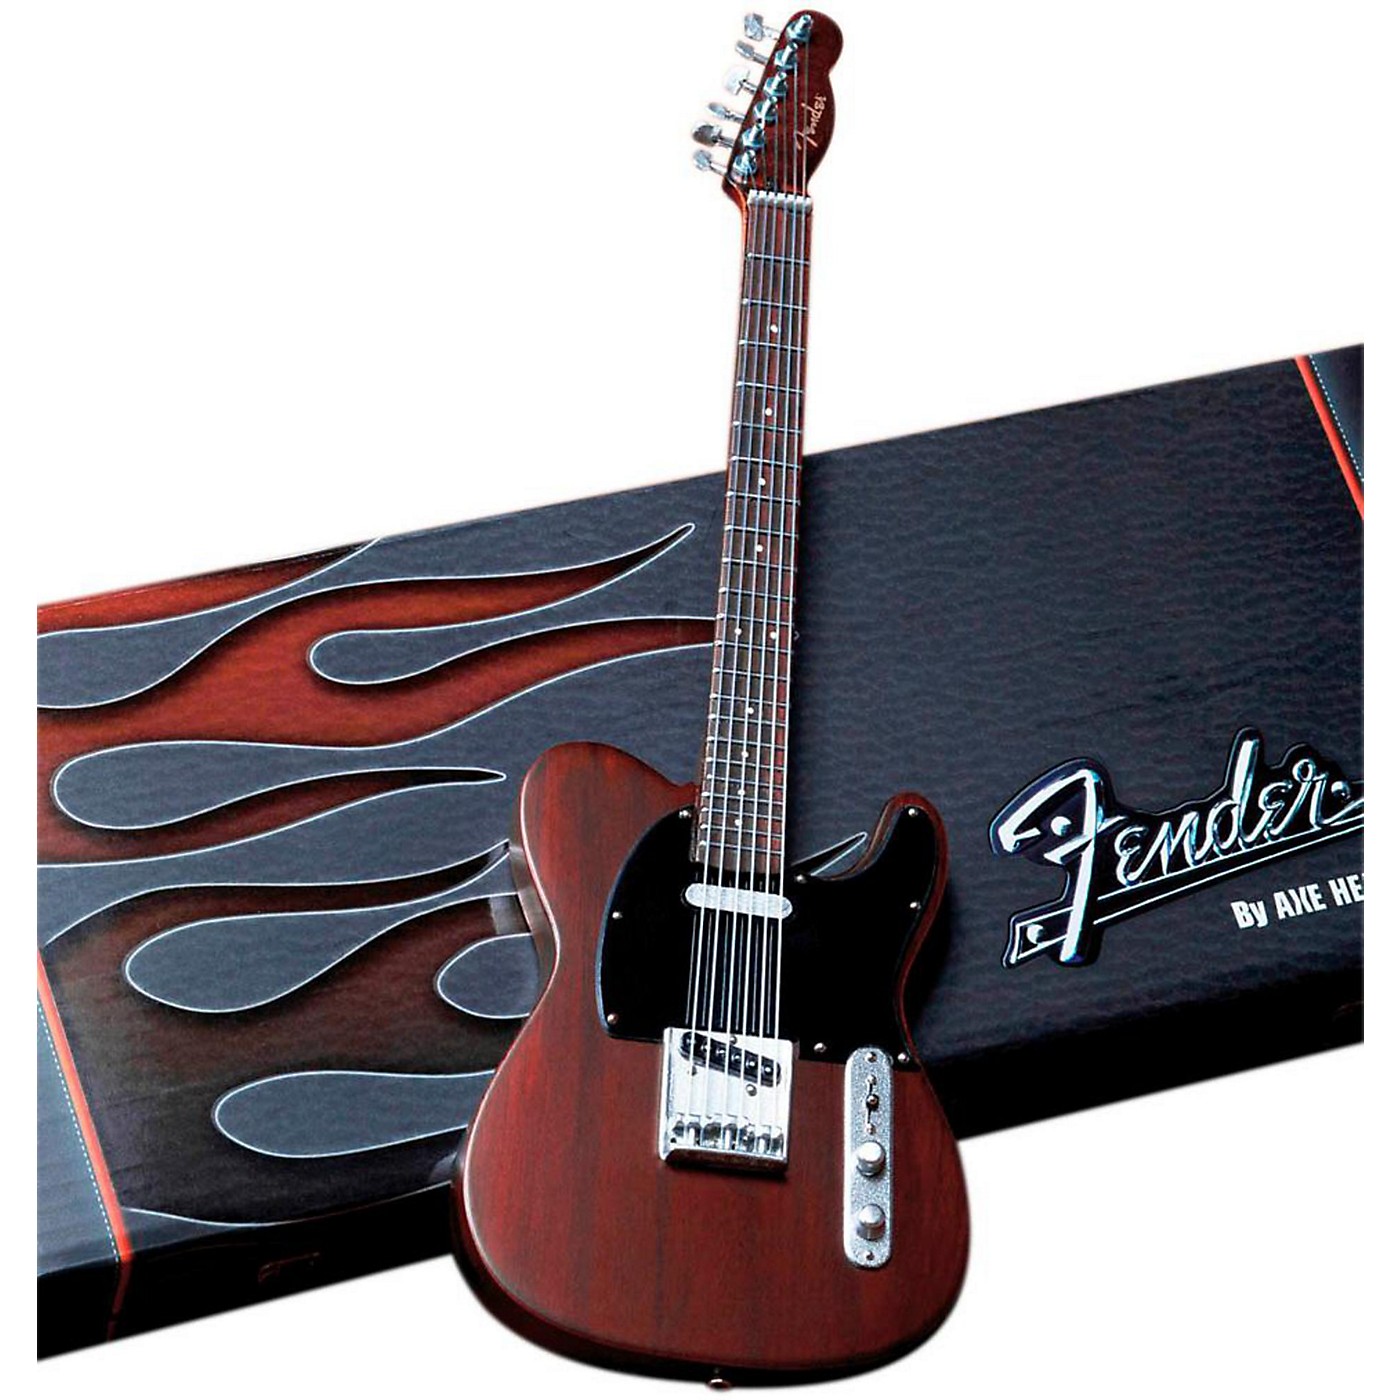 Axe Heaven Fender Telecaster Rosewood Miniature Guitar Replica Collectible thumbnail